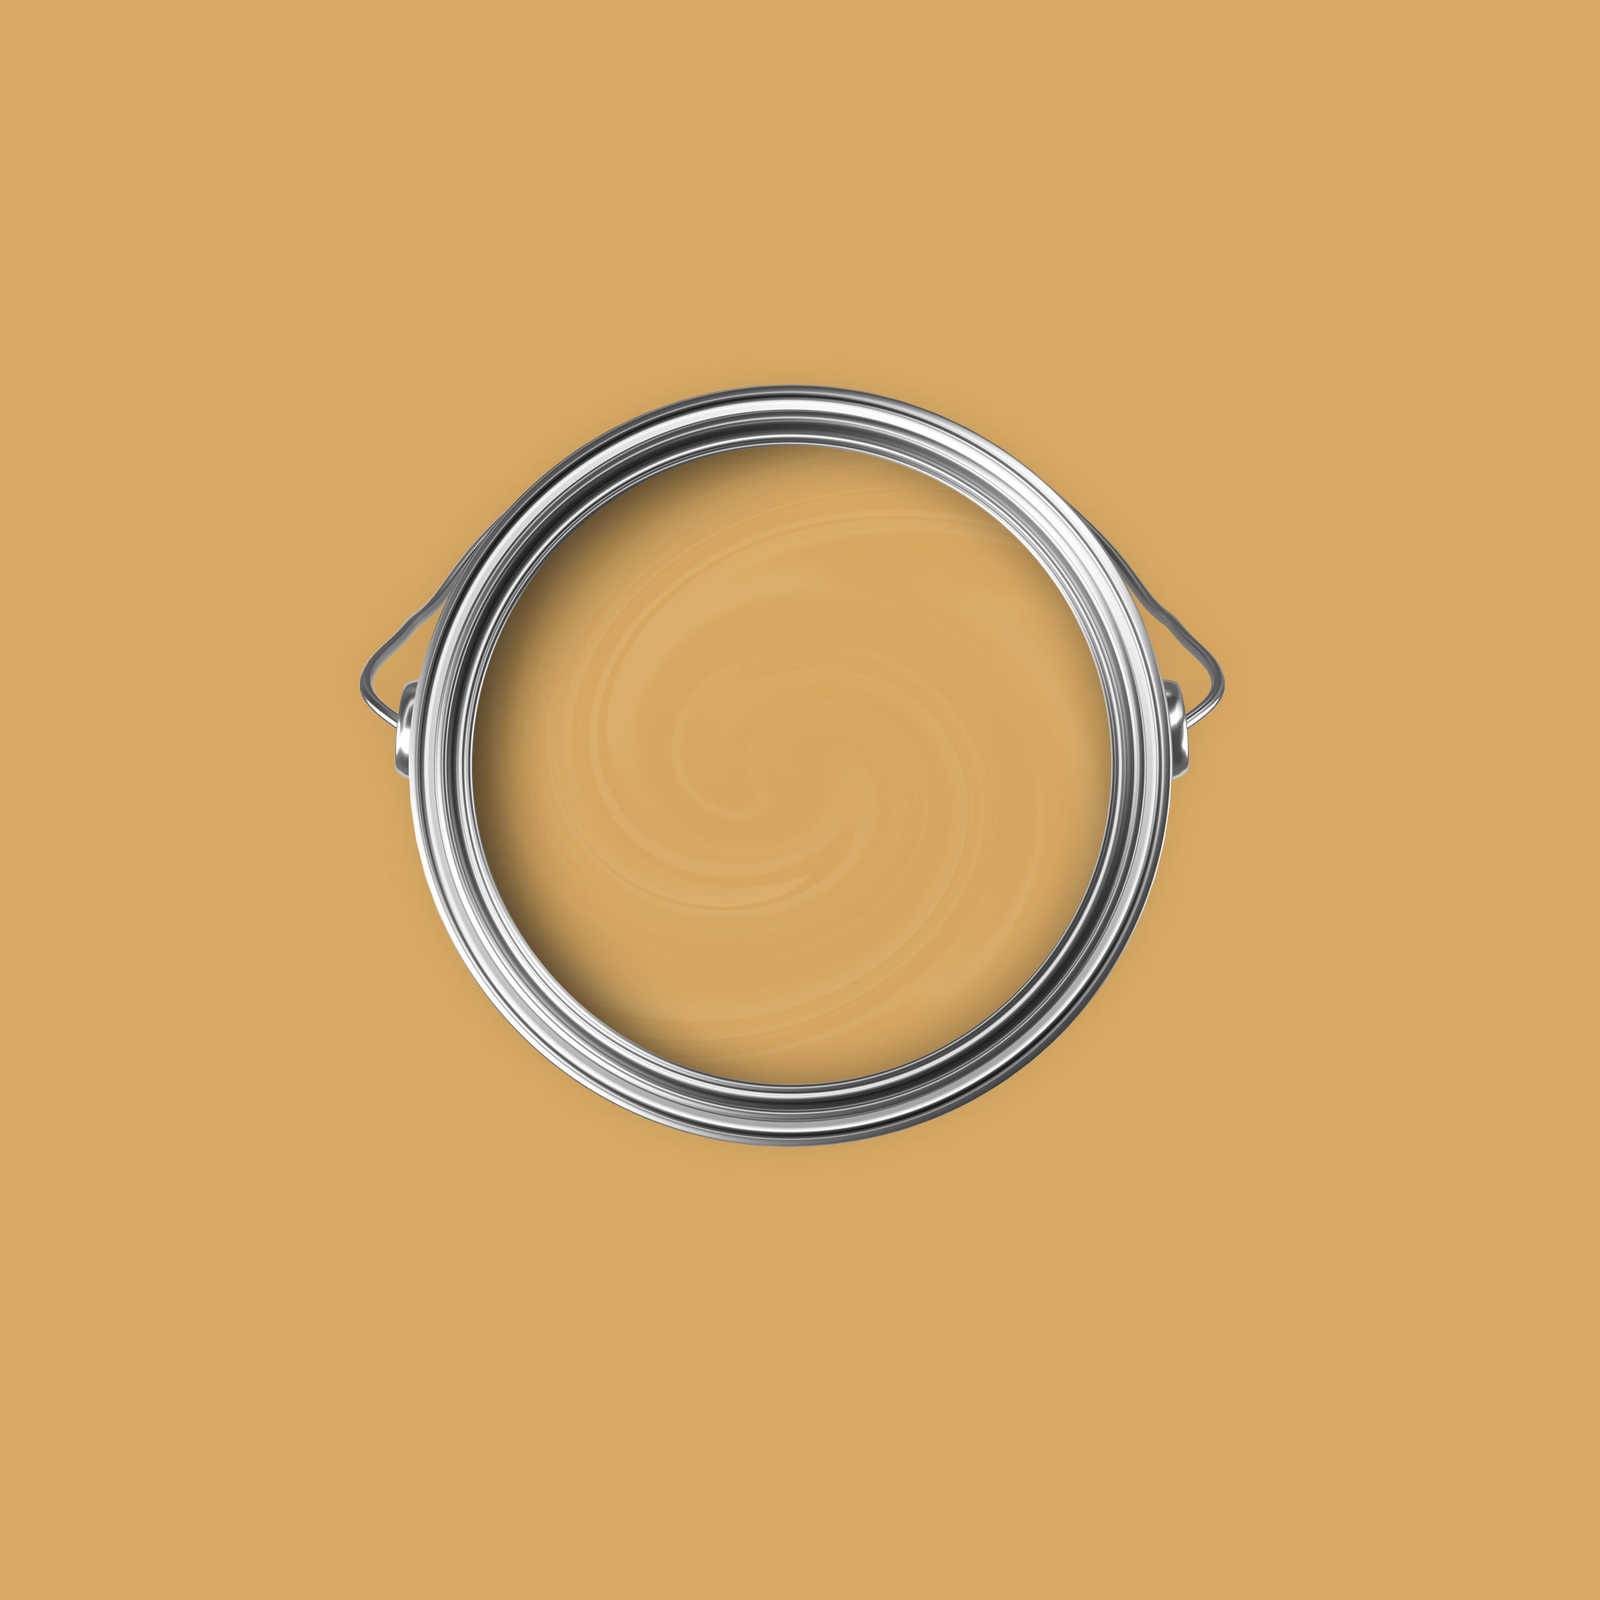             Premium Wall Paint Refreshing Mustard Yellow »Beige Orange/Sassy Saffron« NW812 – 2.5 litre
        